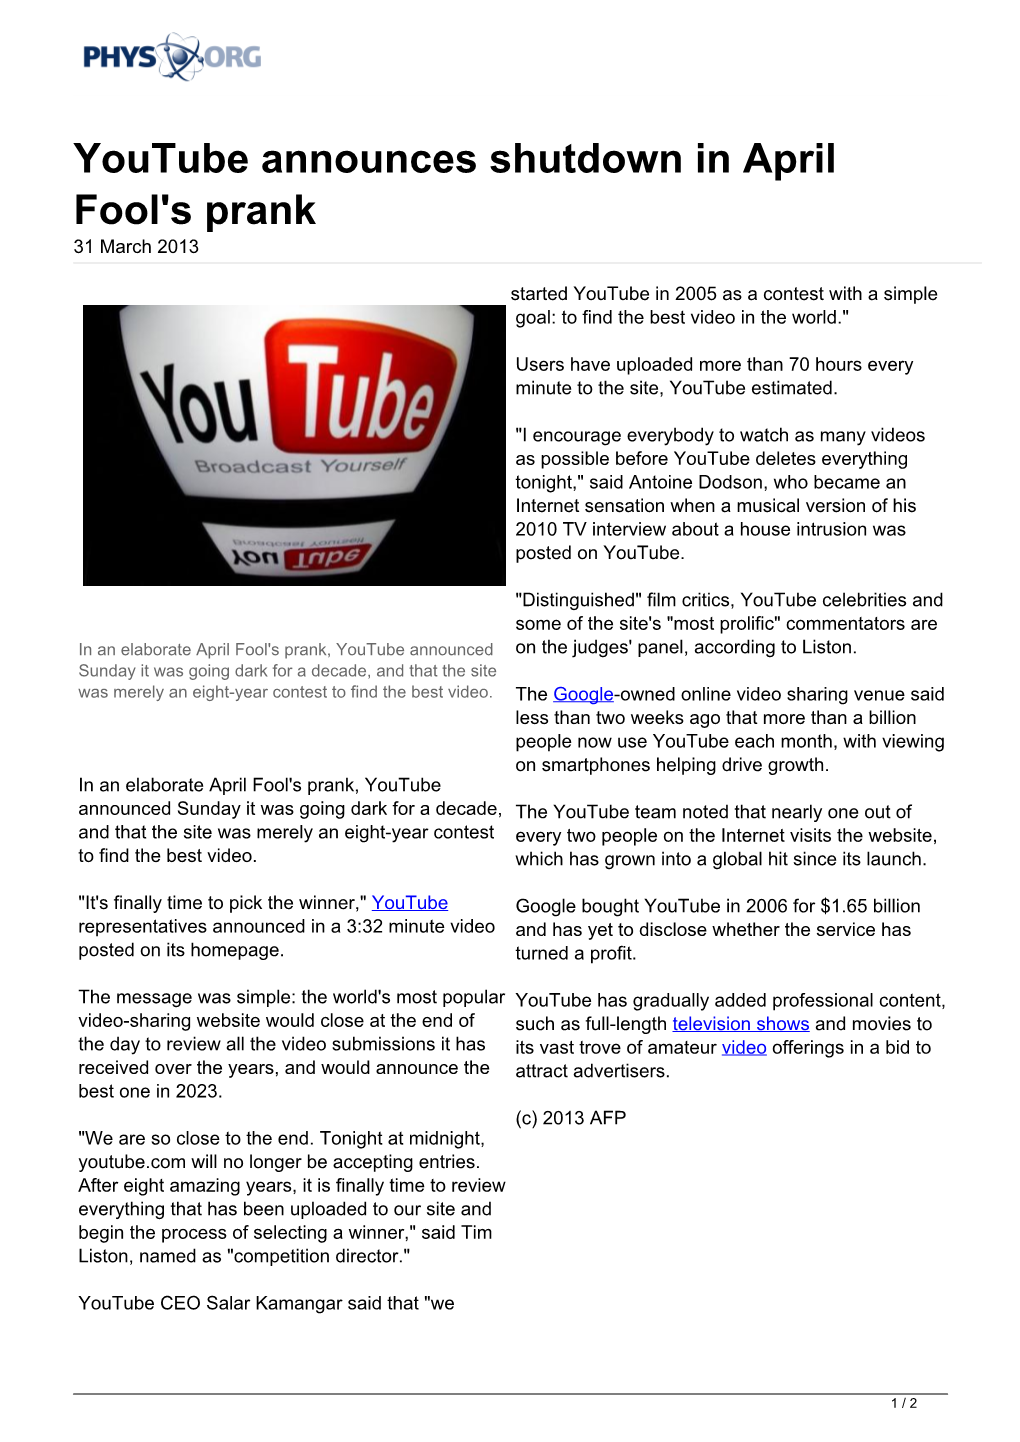 Youtube Announces Shutdown in April Fool's Prank 31 March 2013